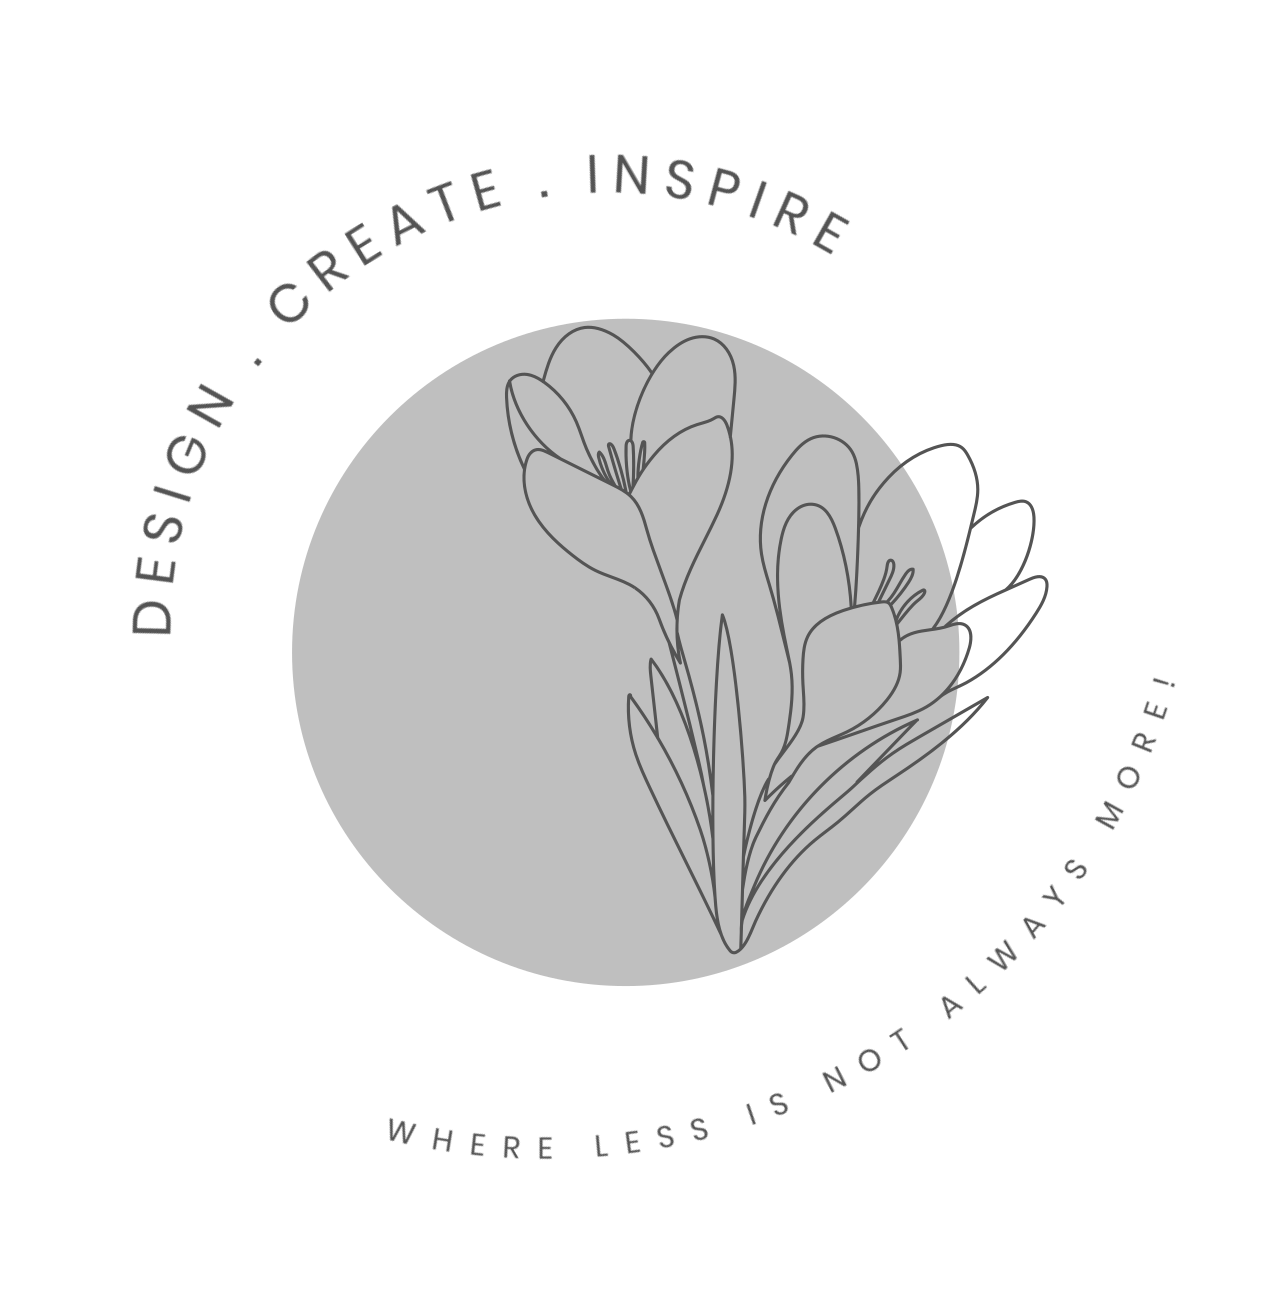 DESIGN . CREATE . INSPIRE's web page